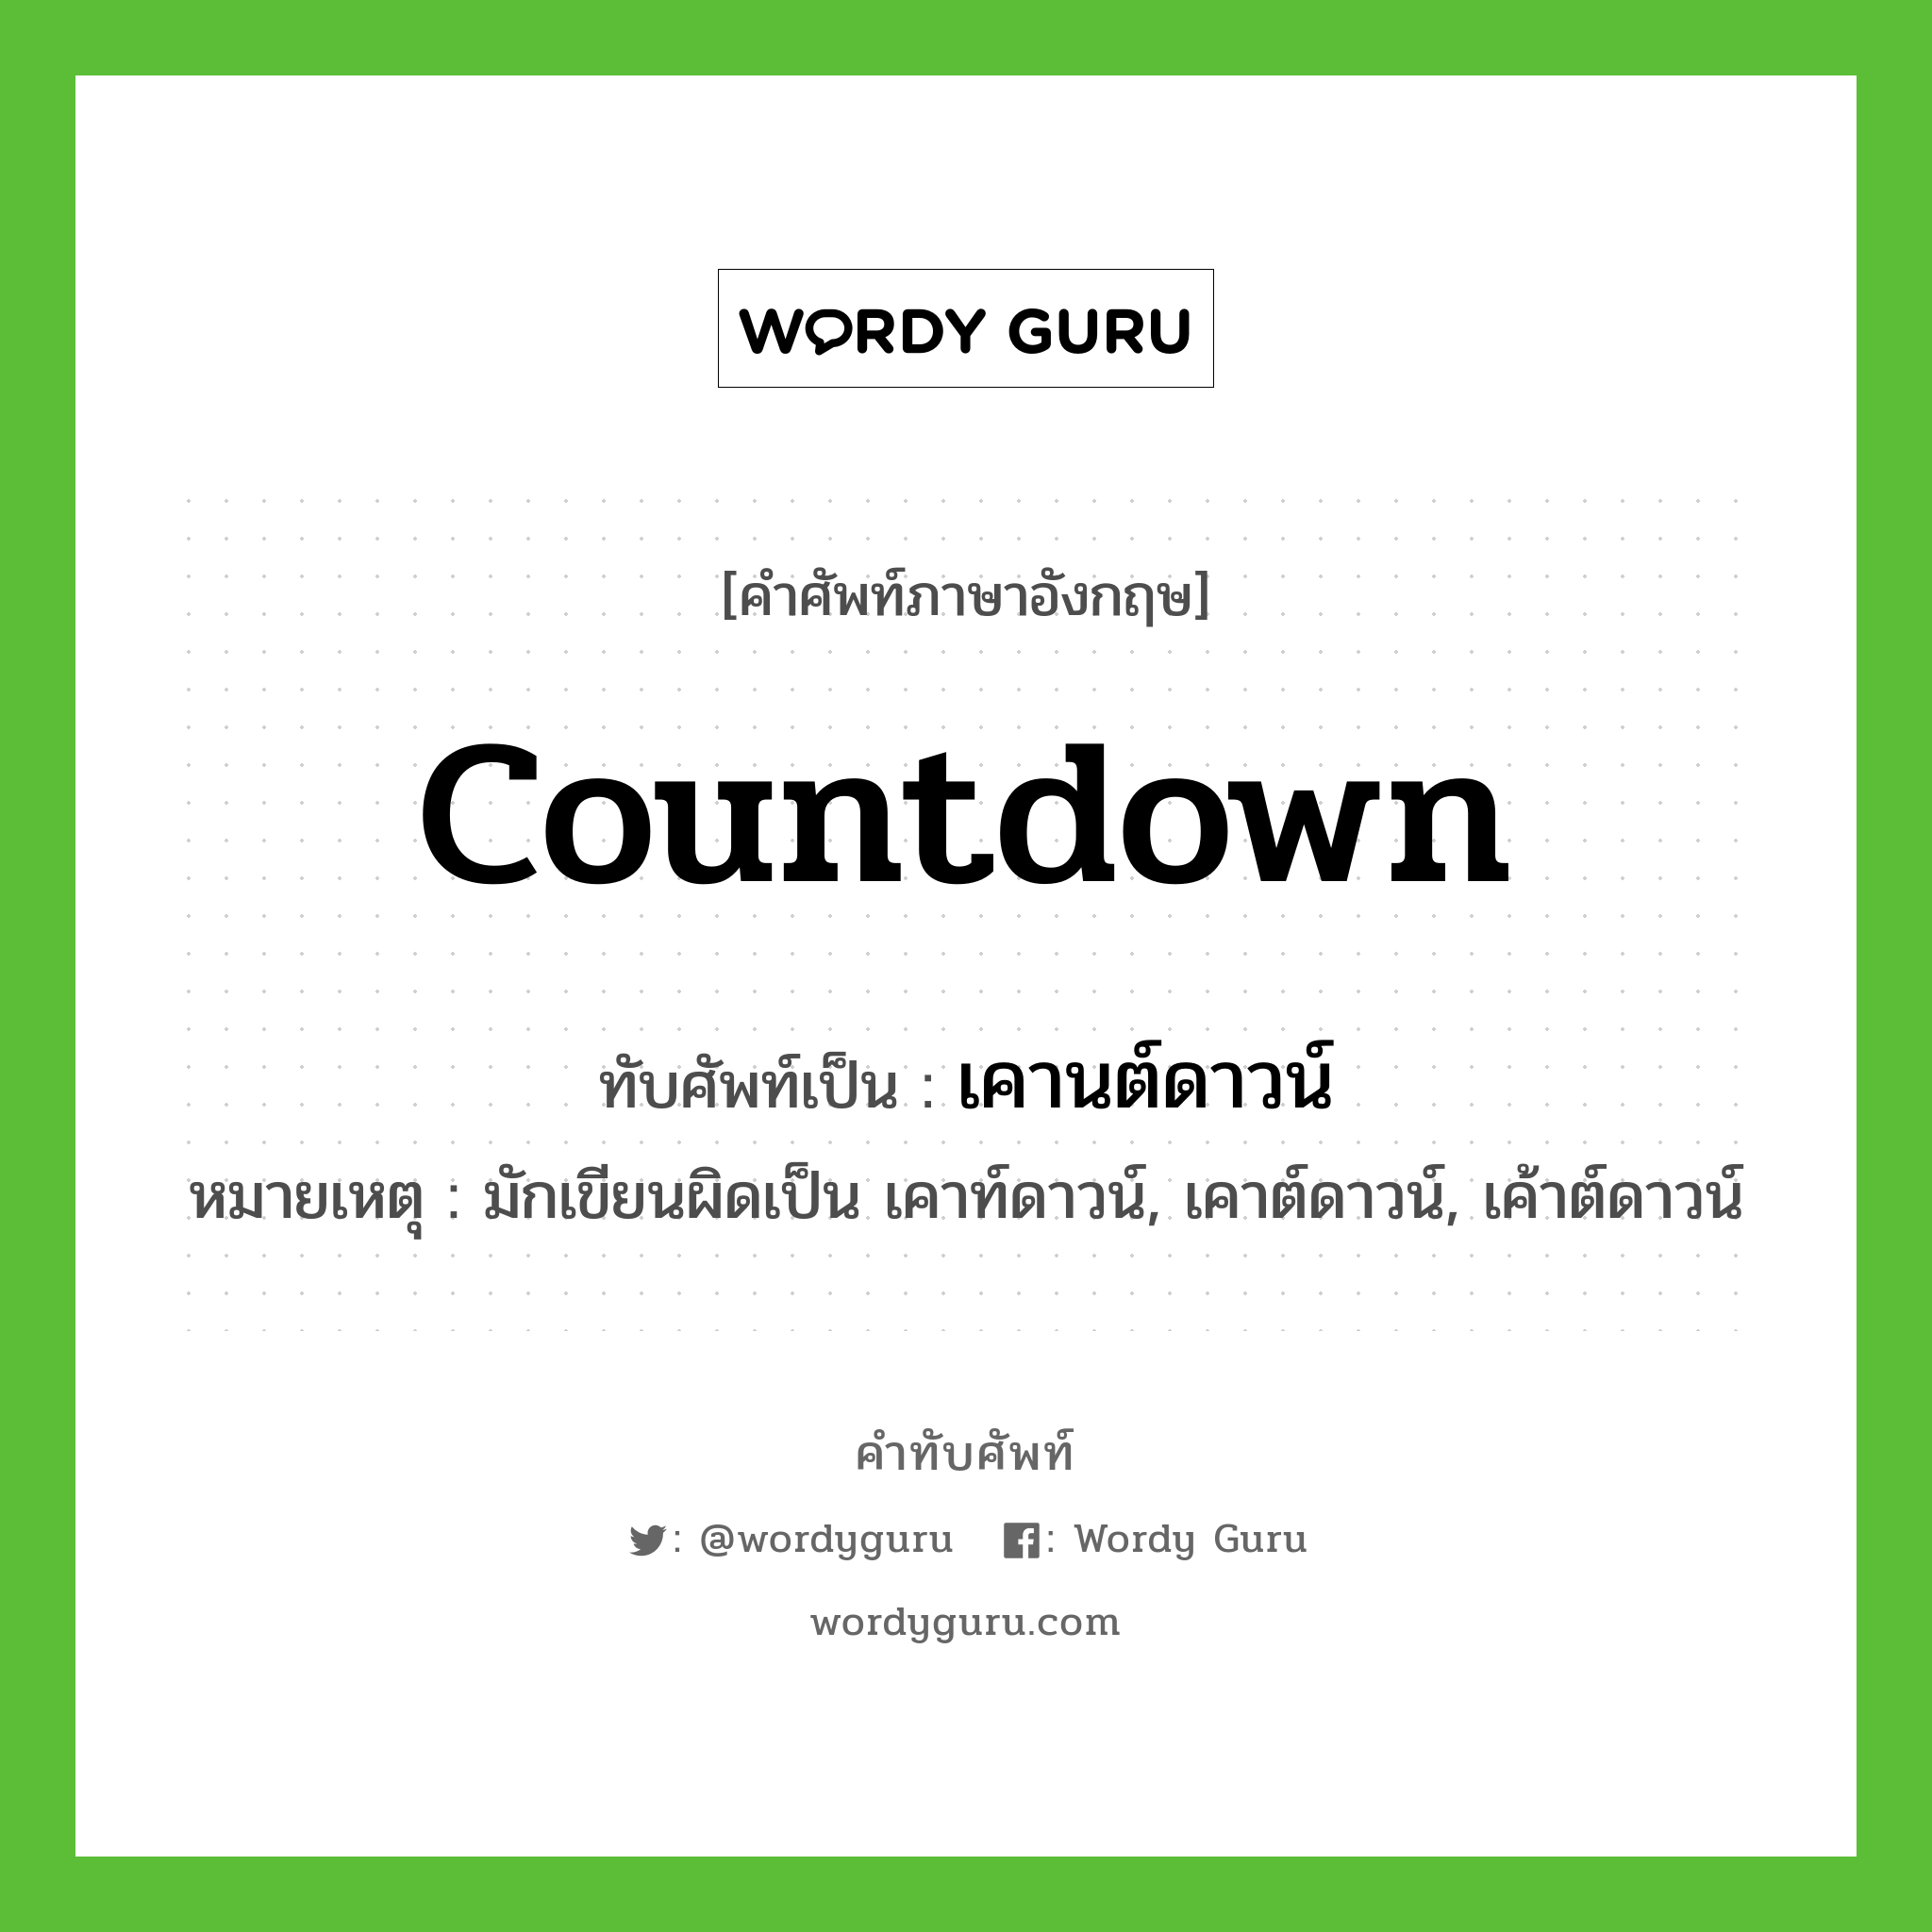 Countdown เขียนเป็นคำไทยว่าอะไร?, คำศัพท์ภาษาอังกฤษ Countdown ทับศัพท์เป็น เคานต์ดาวน์ หมายเหตุ มักเขียนผิดเป็น เคาท์ดาวน์, เคาต์ดาวน์, เค้าต์ดาวน์